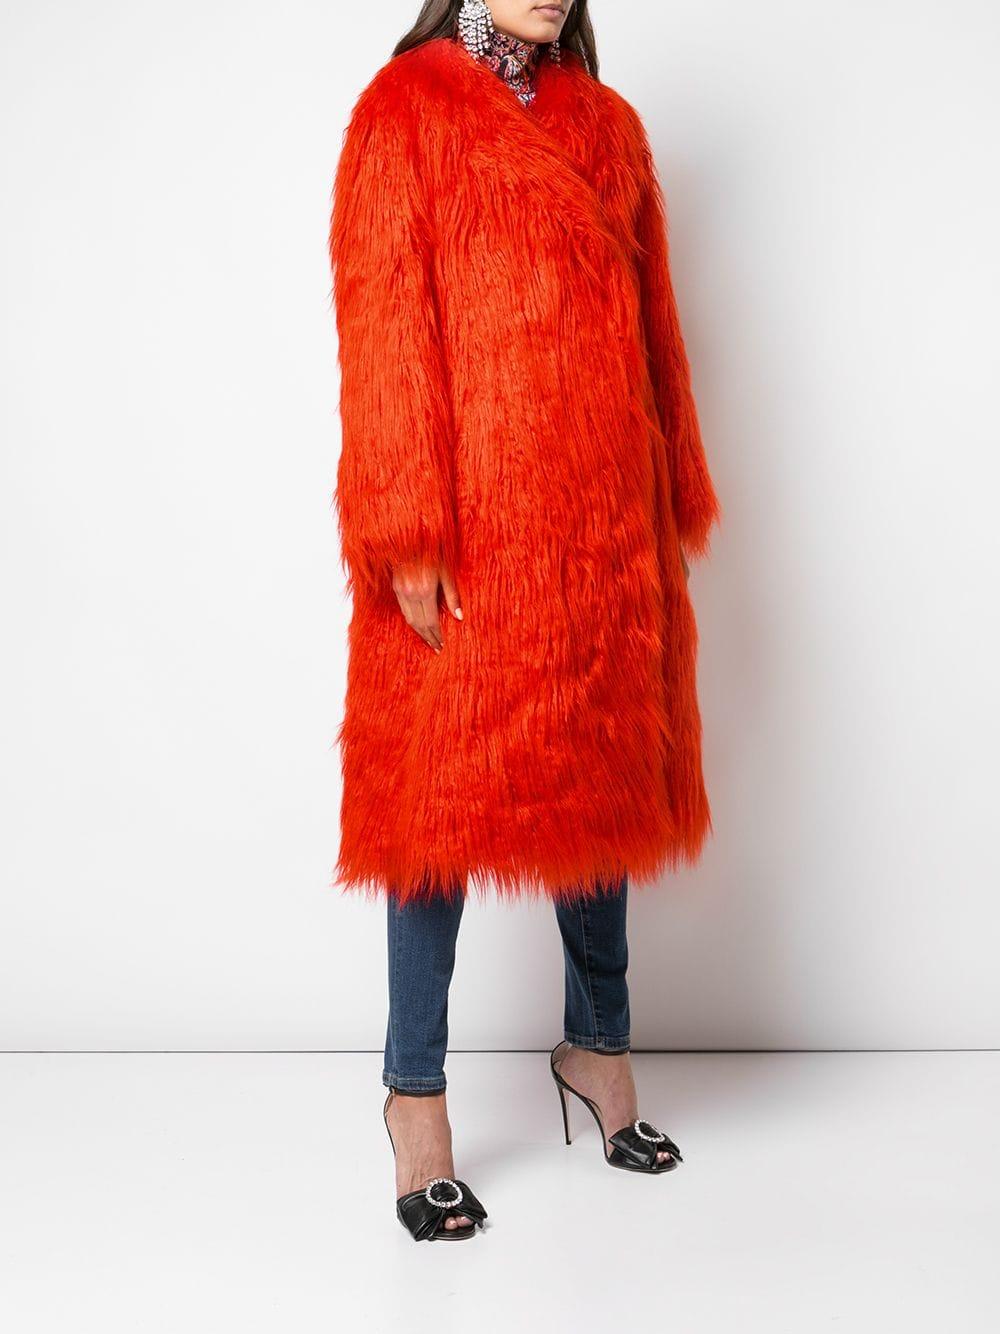 Gucci Faux Fur Coat in Red | Lyst